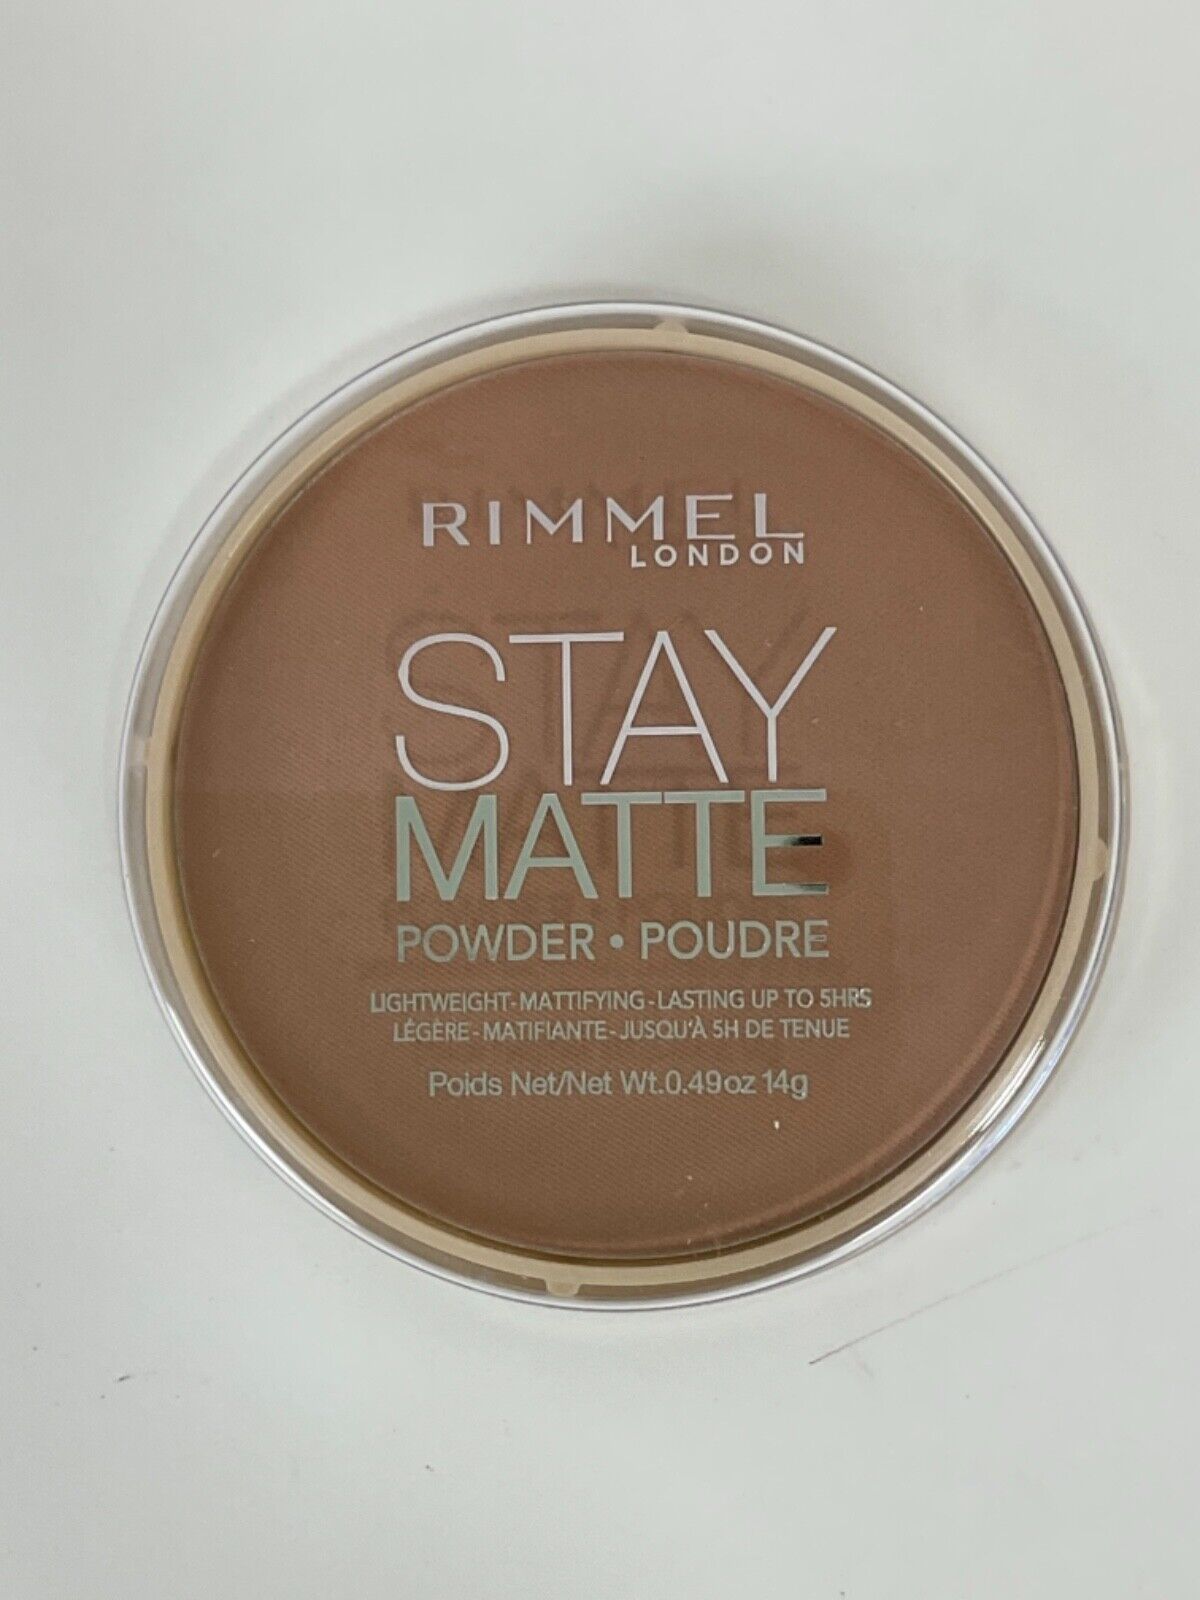 Rimmel London Stay Matte Face Powder #016 Deep Beige .49oz/14g New free shipping - $6.99